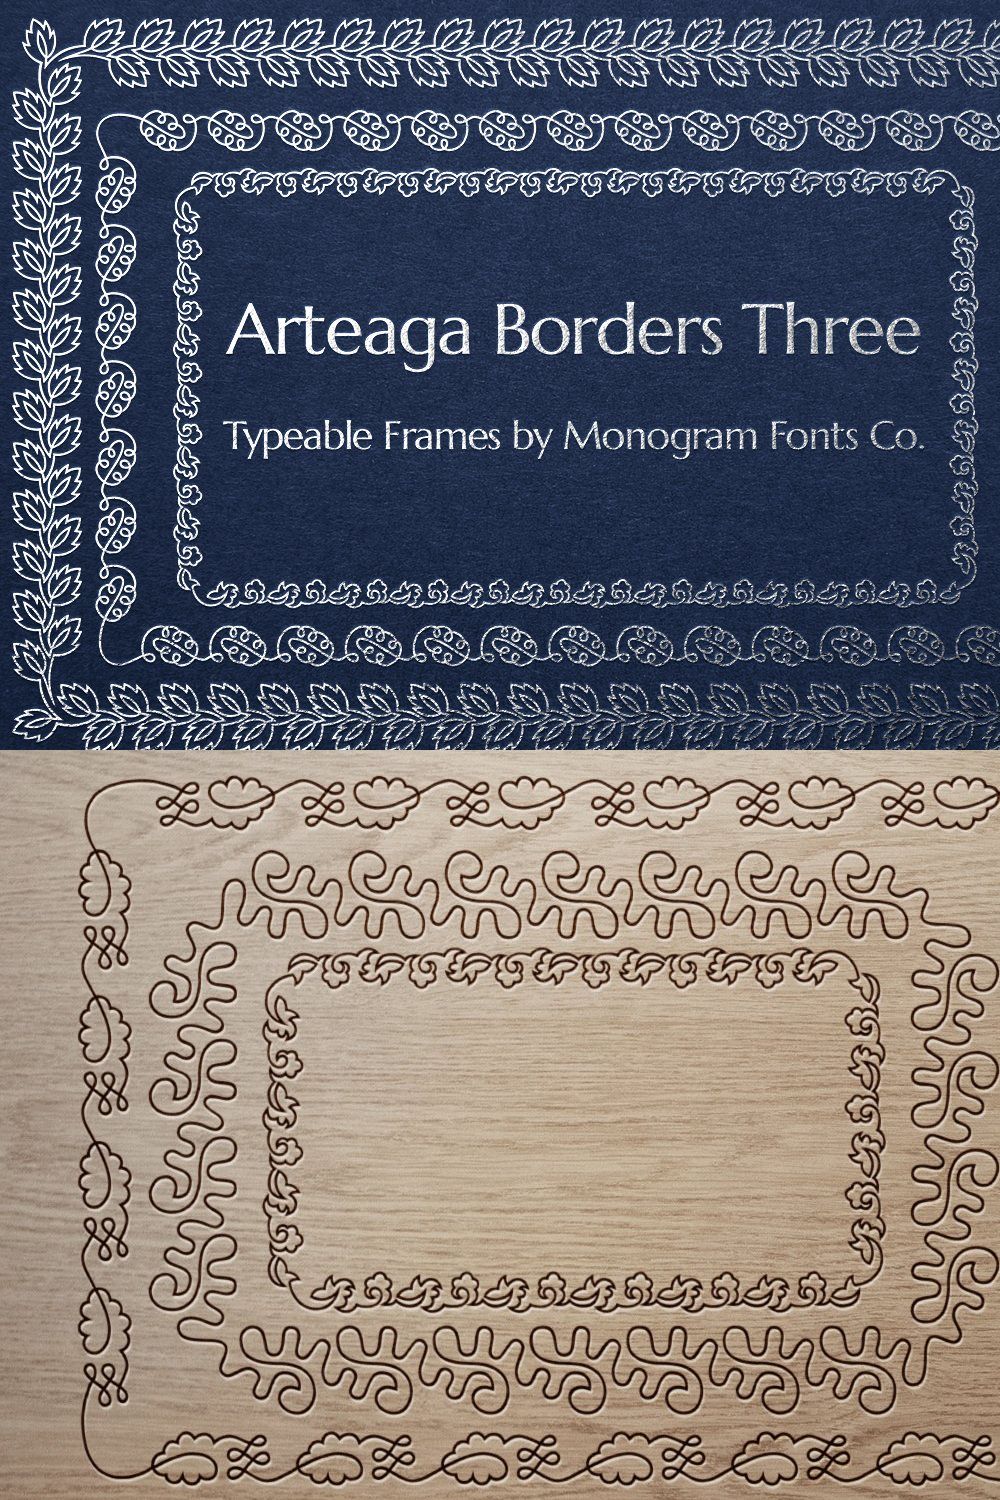 MFC Arteaga Borders Three pinterest preview image.